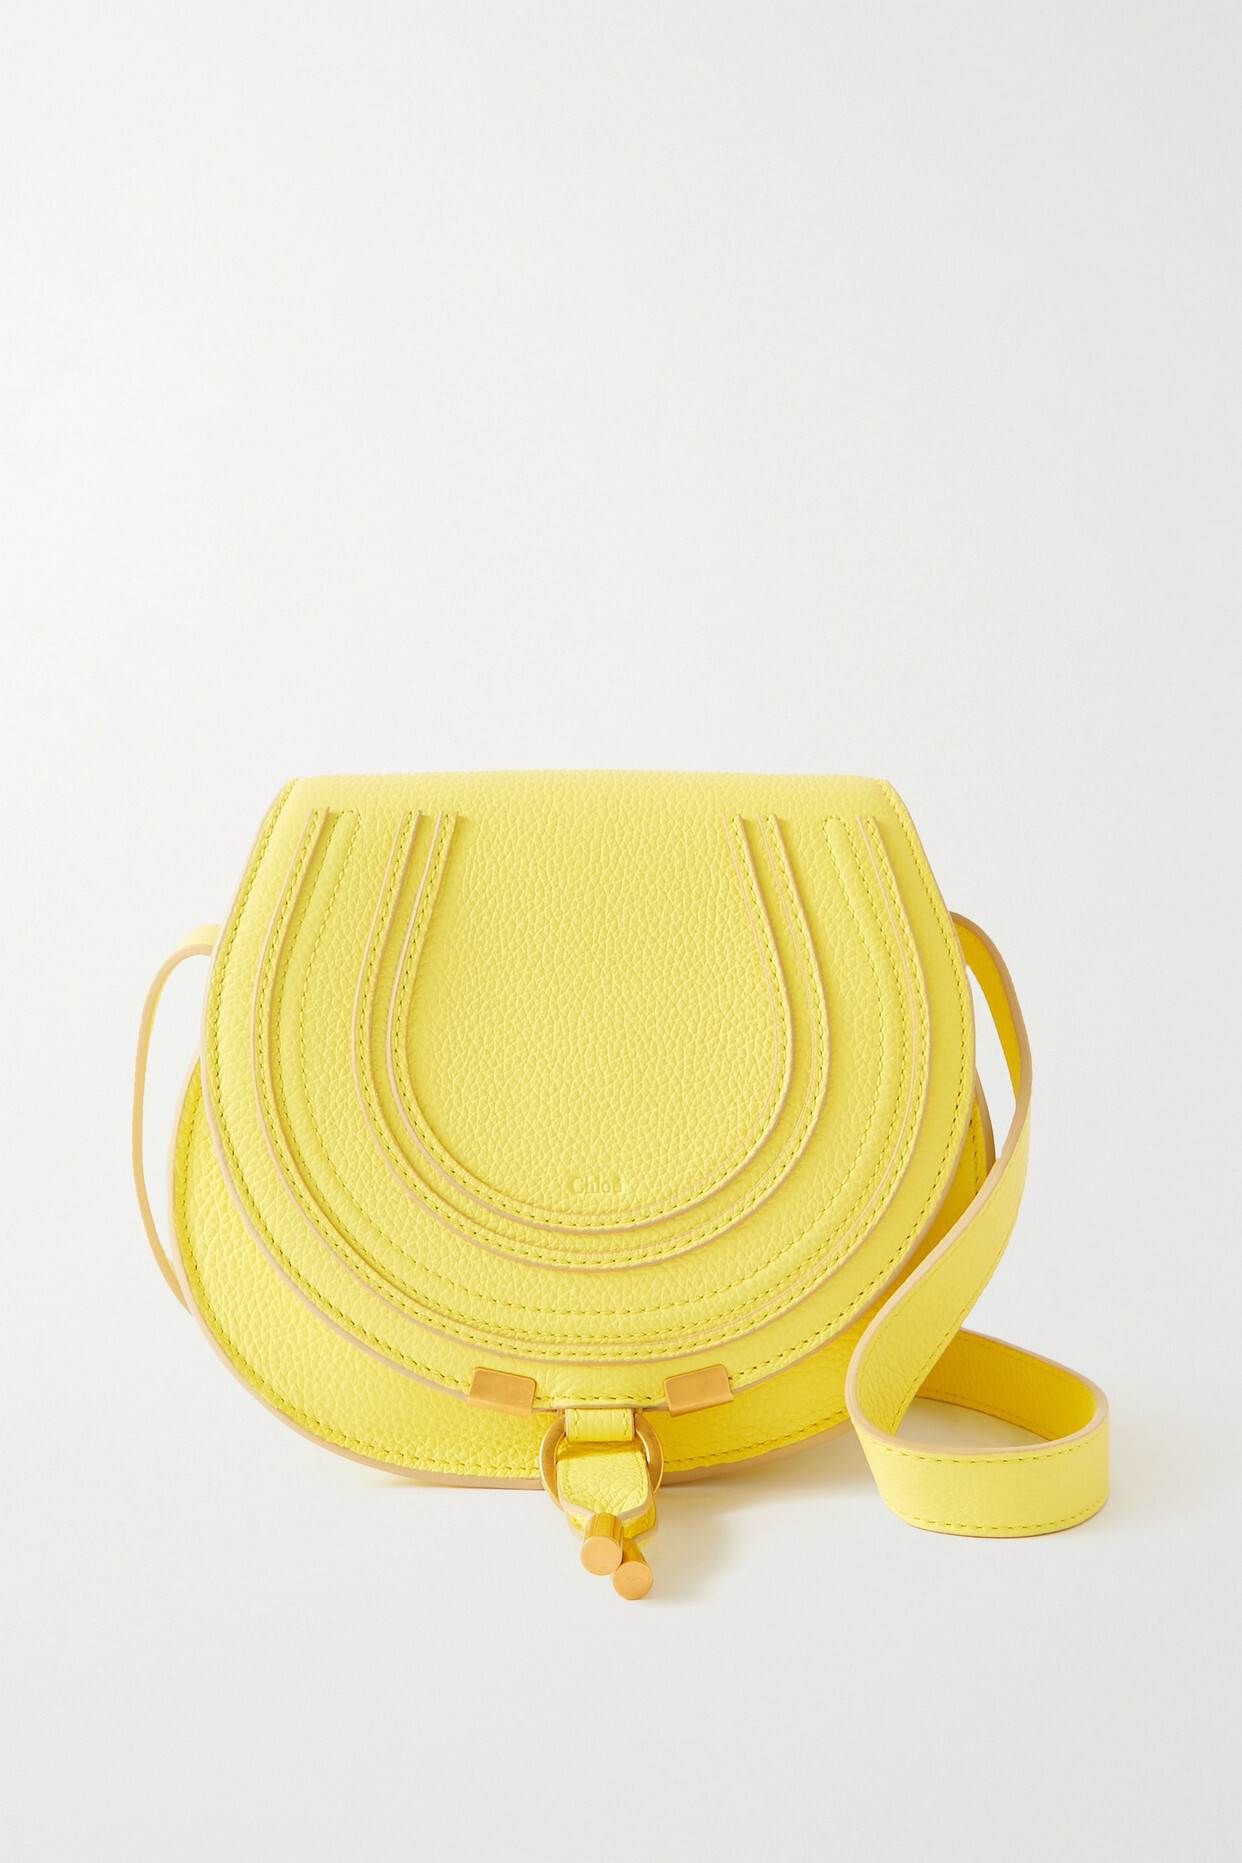 Chloé Chloé - Marcie Mini Textured-leather Shoulder Bag - Yellow